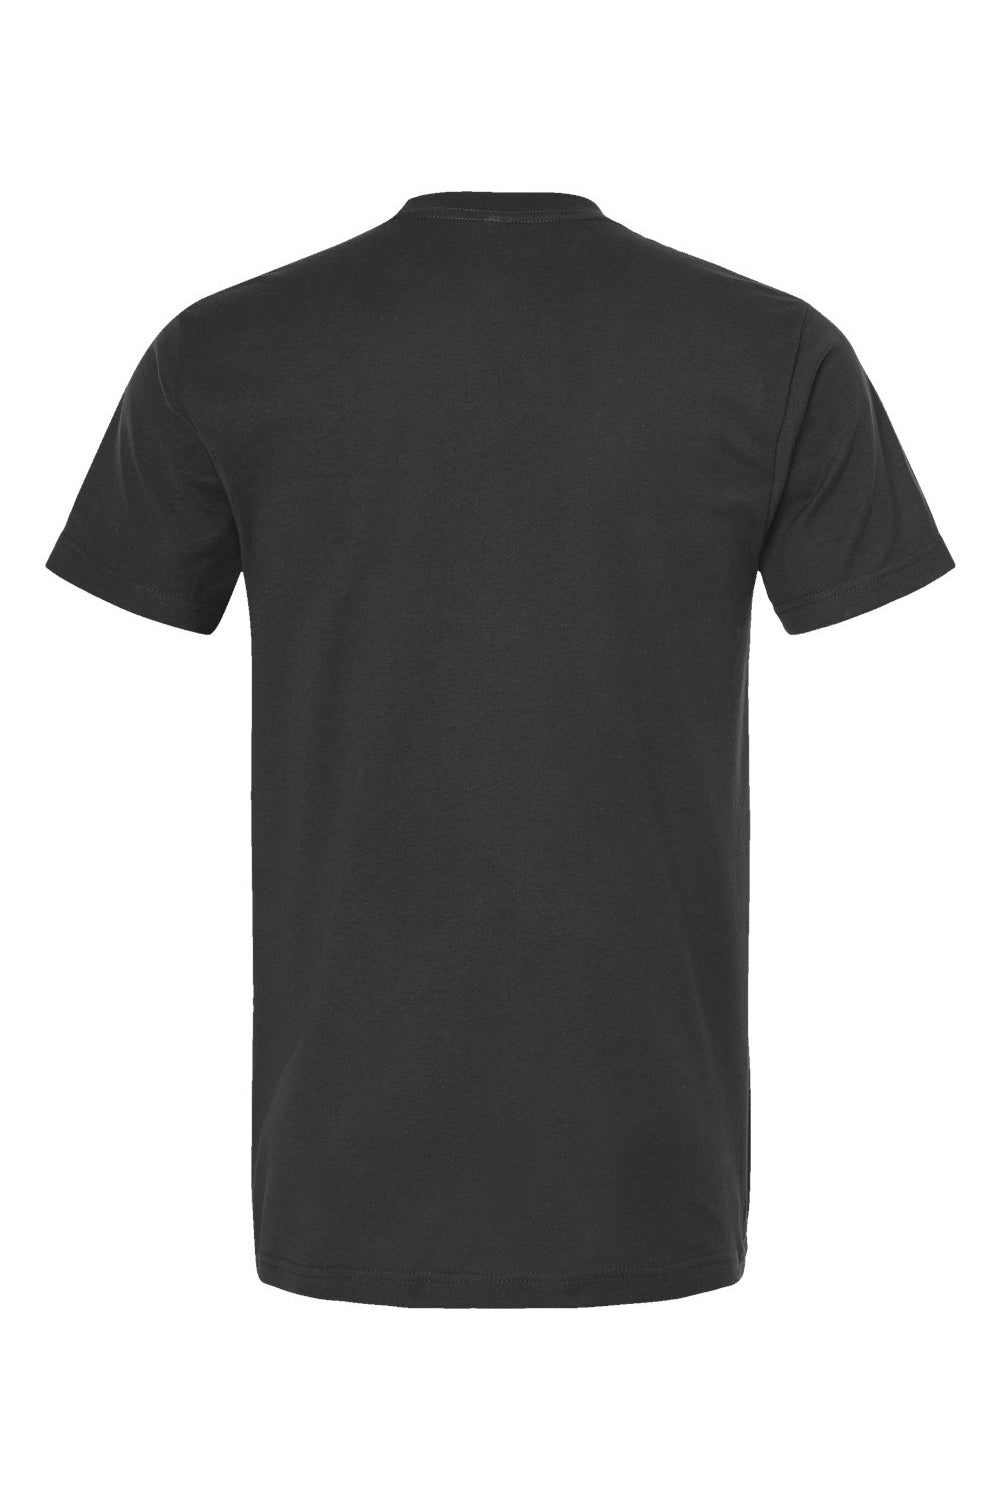 Tultex 202 Mens Fine Jersey Short Sleeve Crewneck T-Shirt Coal Grey Flat Back